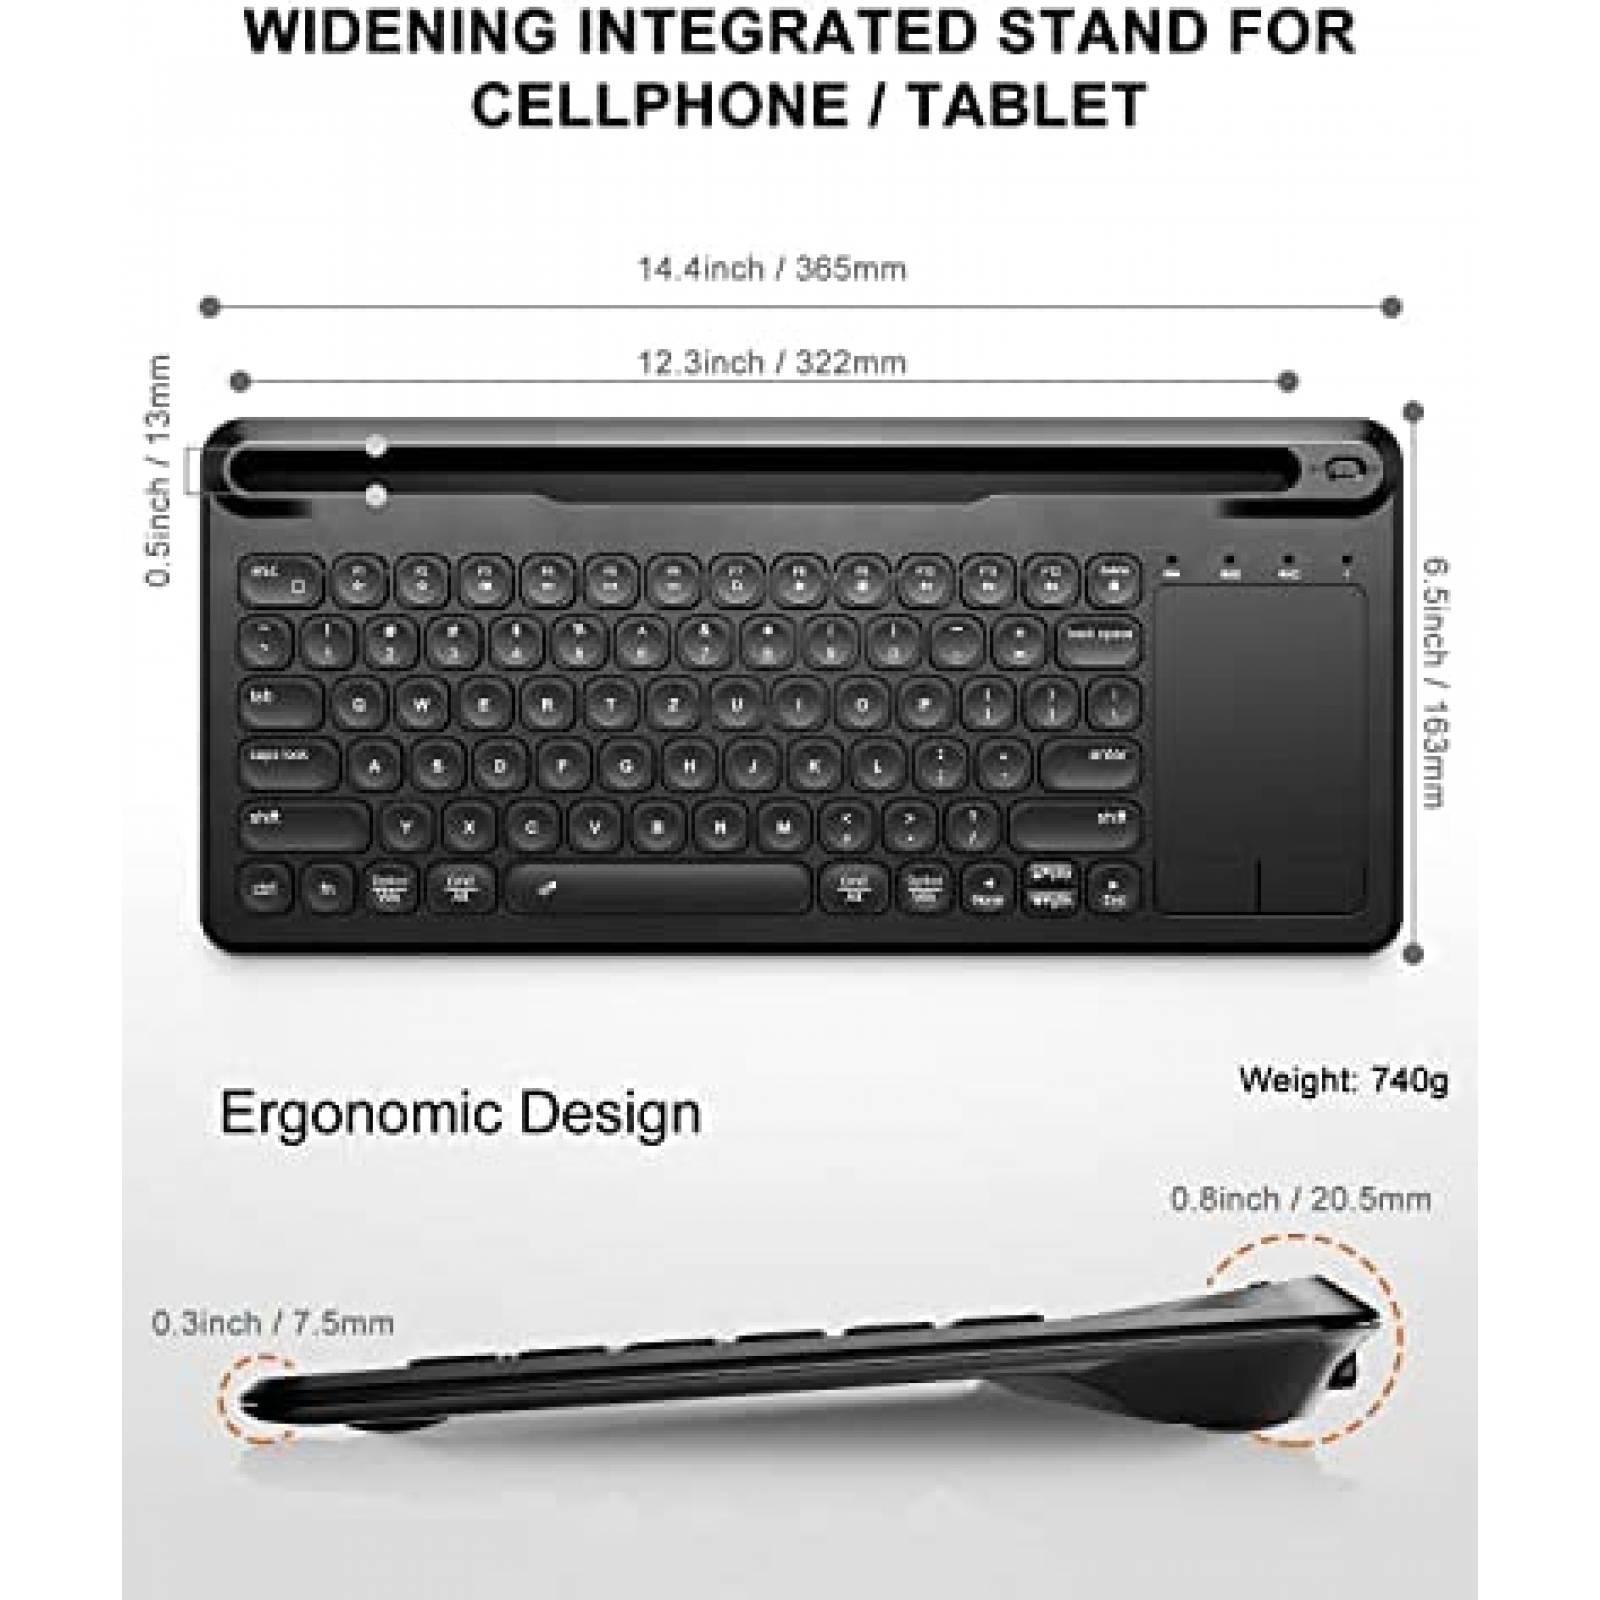 Teclado Bluetooth multidispositivo, teclado inalámbrico recargable portátil  con ranura de soporte interruptor a 2 dispositivos para iPad, tableta